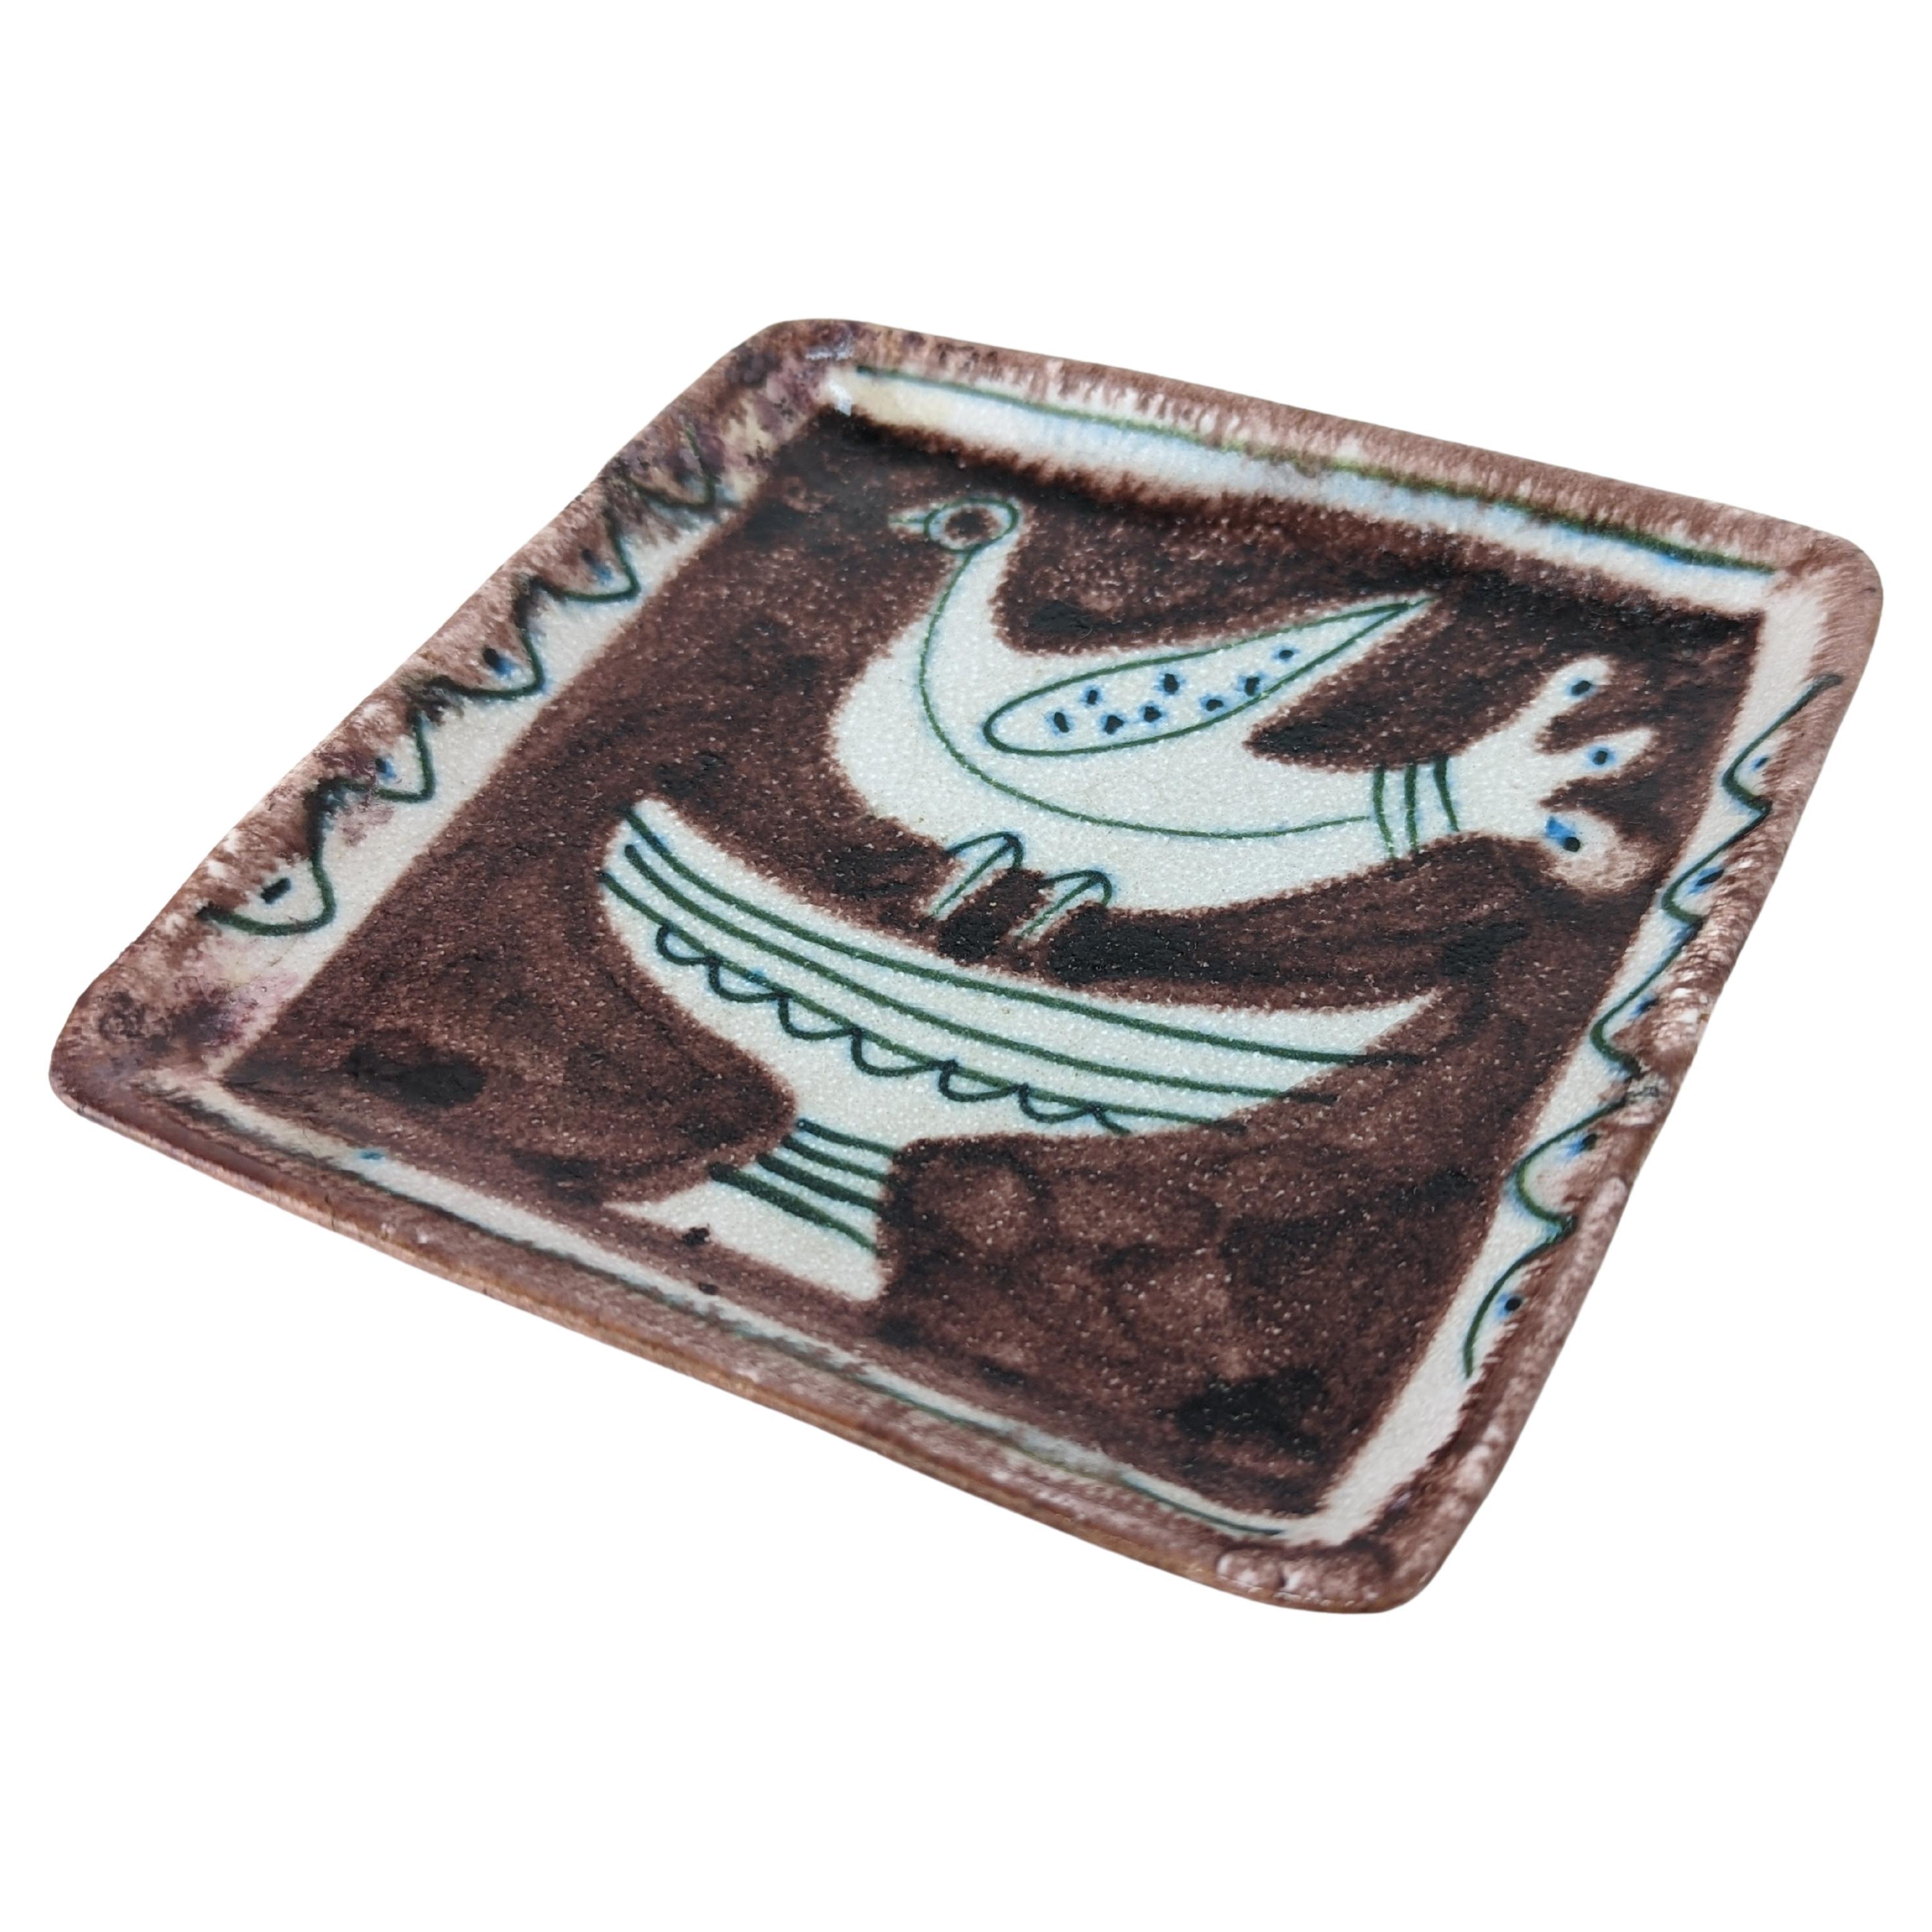 Glazed Ceramic Tray by Guido Gambone 1950s